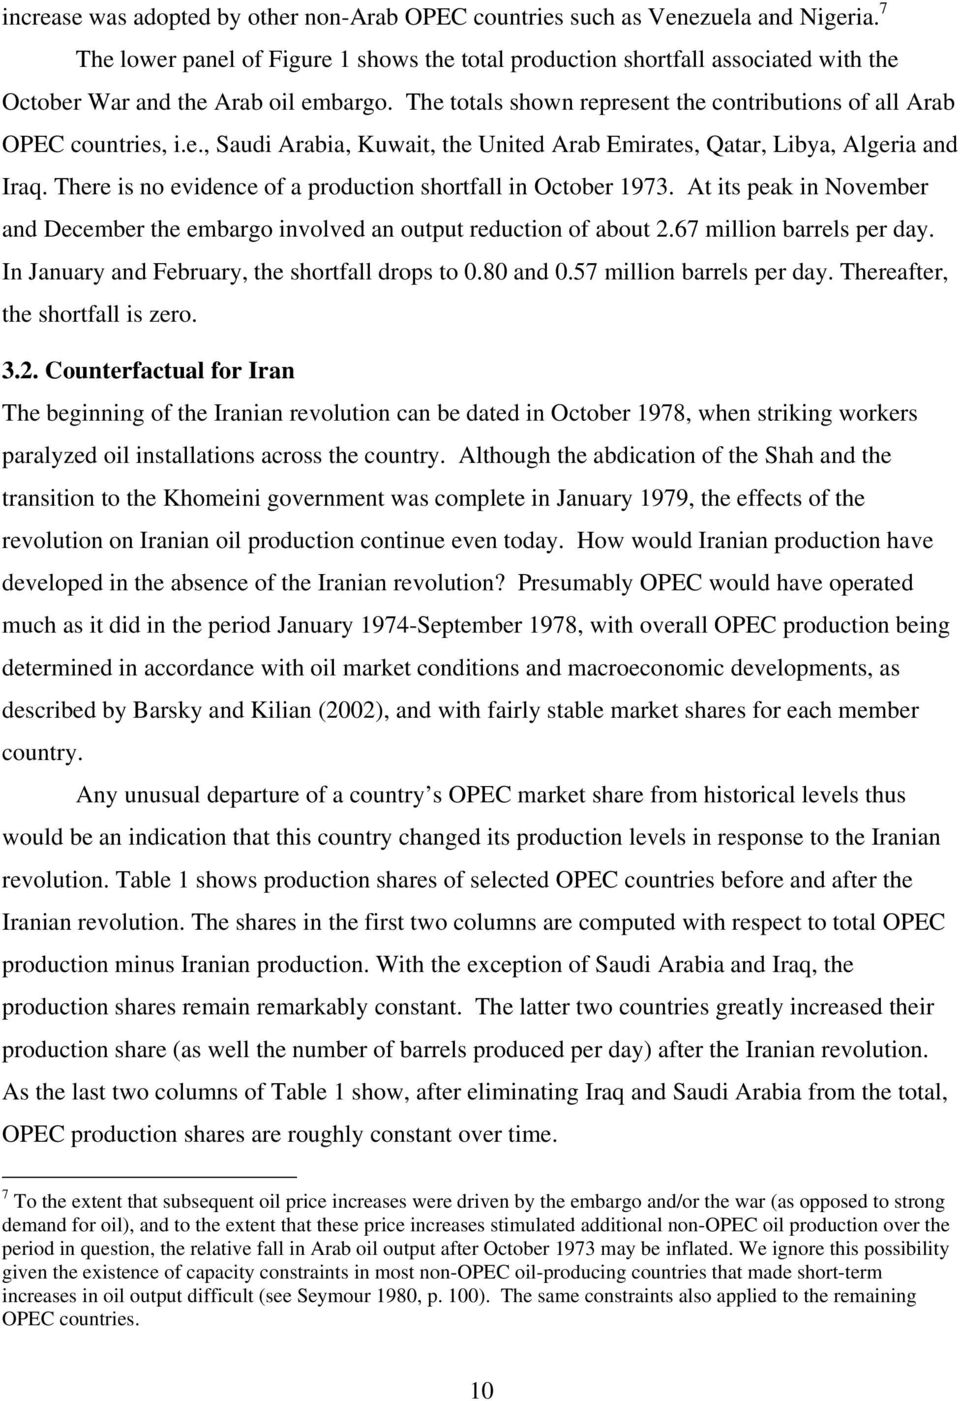 e., Saudi Arabia, Kuwait, the United Arab Emirates, Qatar, Libya, Algeria and Iraq. There is no evidence of a production shortfall in October 1973.